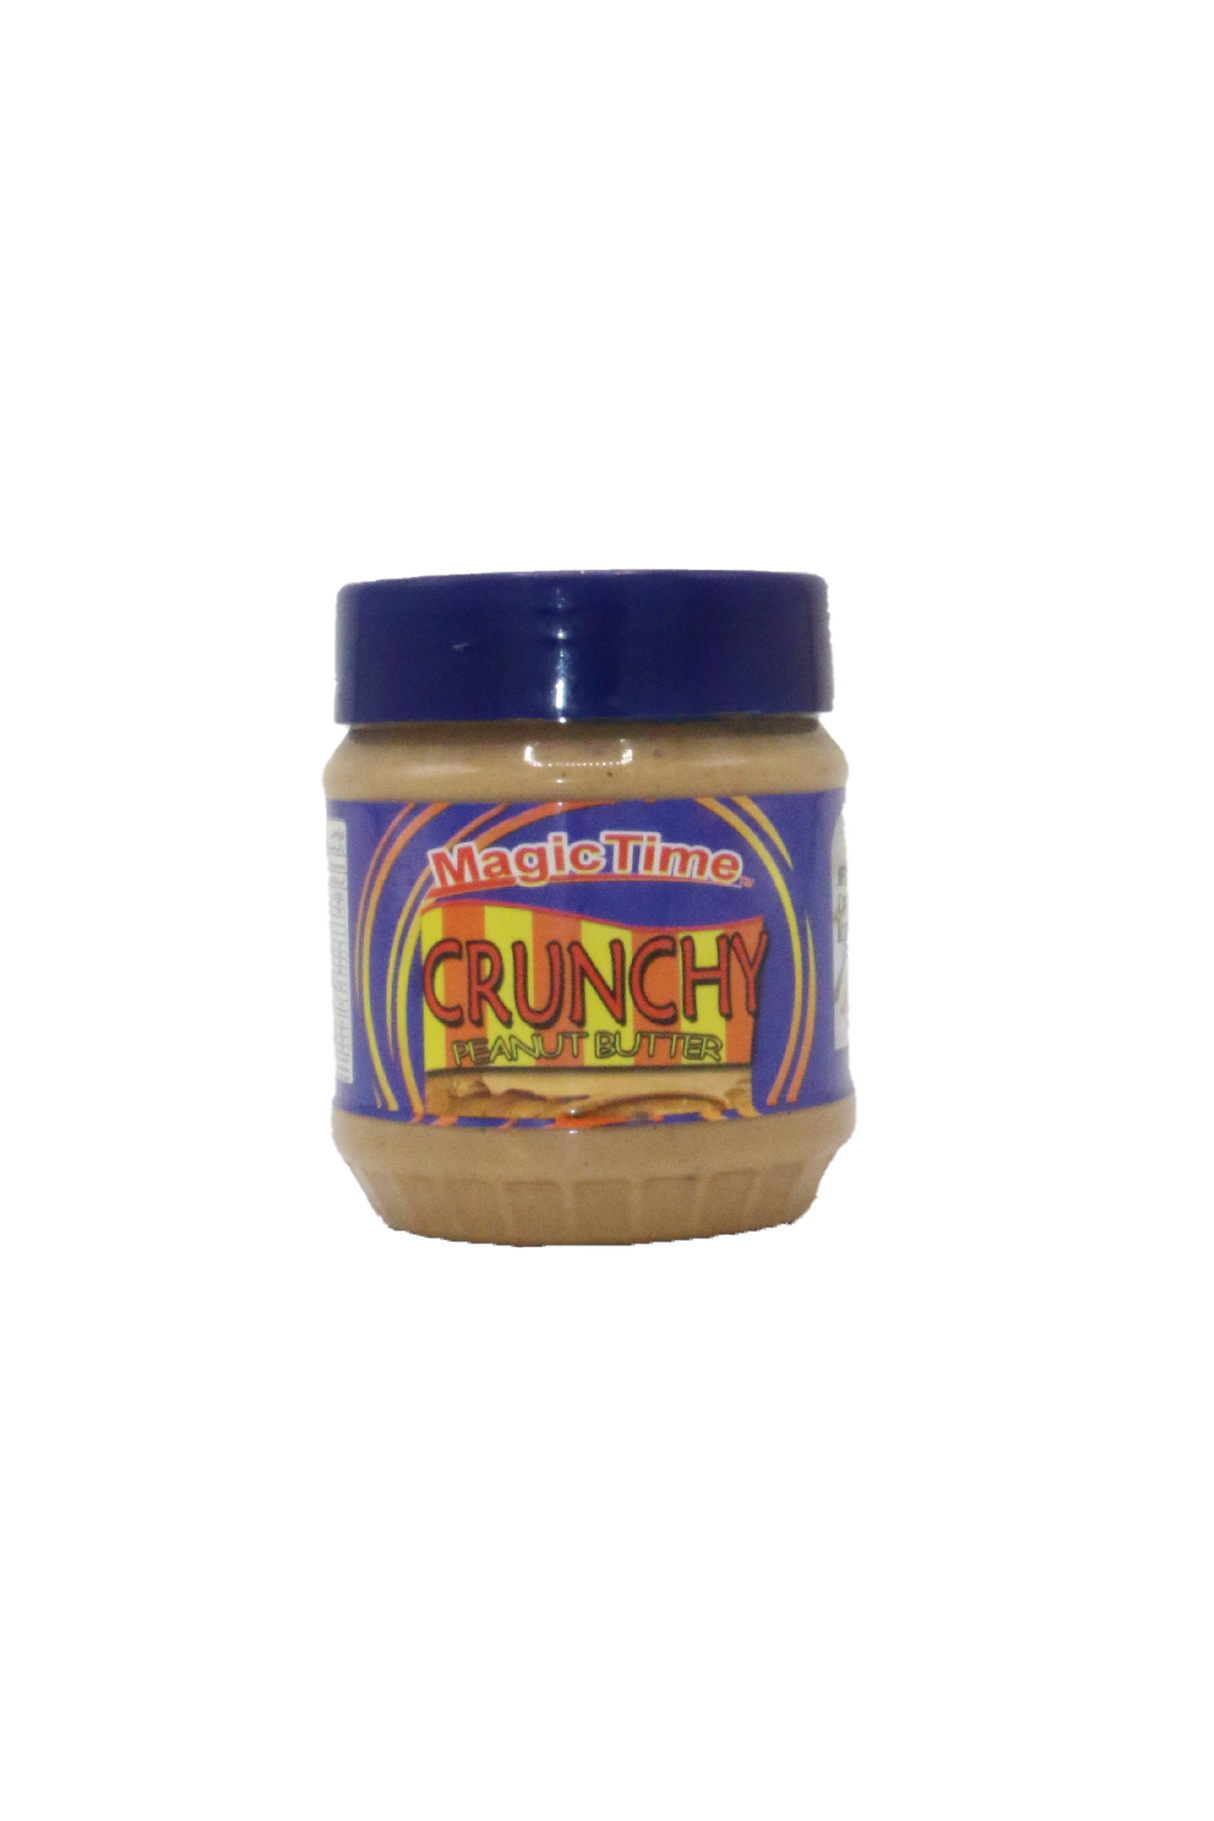 magic time crunchy peanut butter 320g